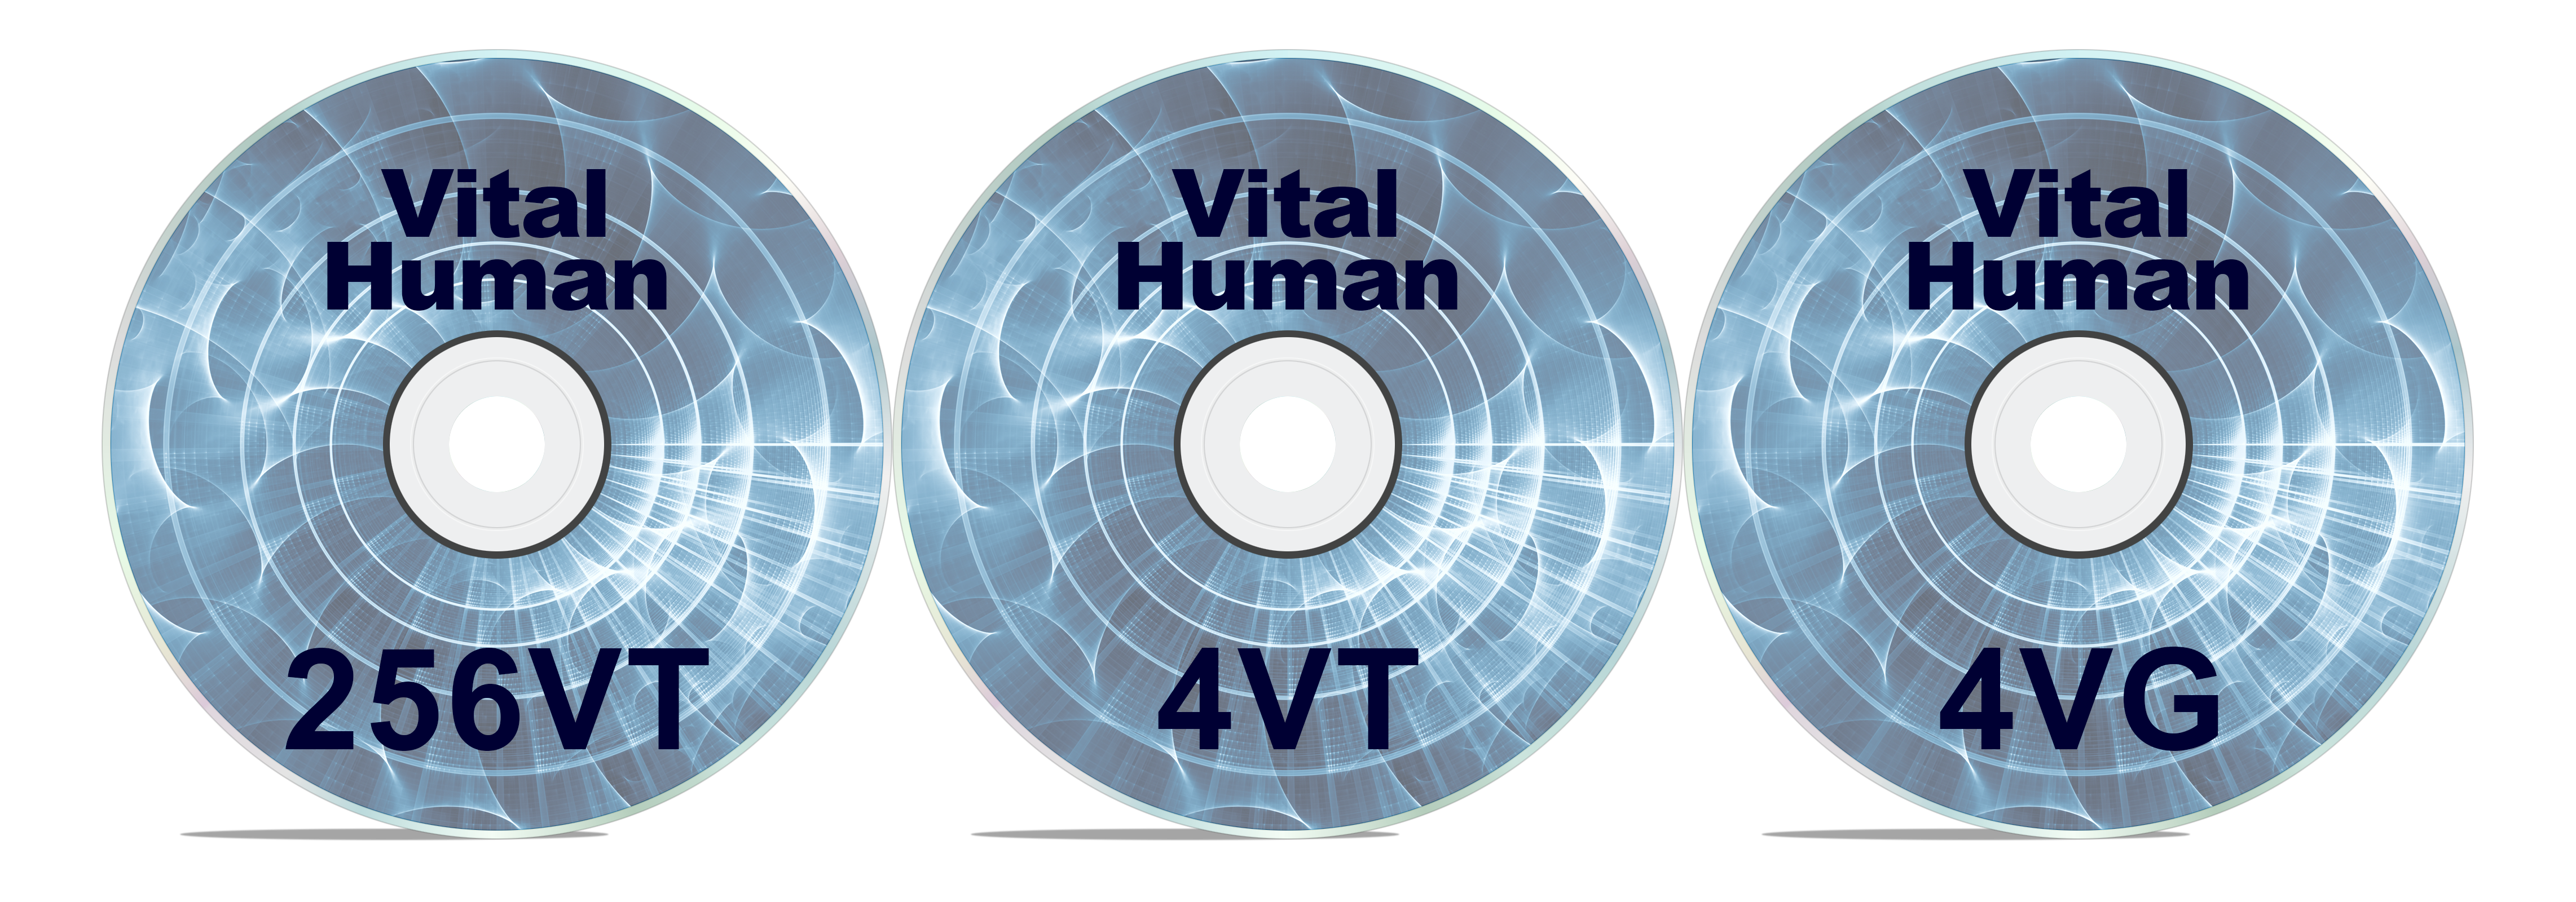 Vital Human